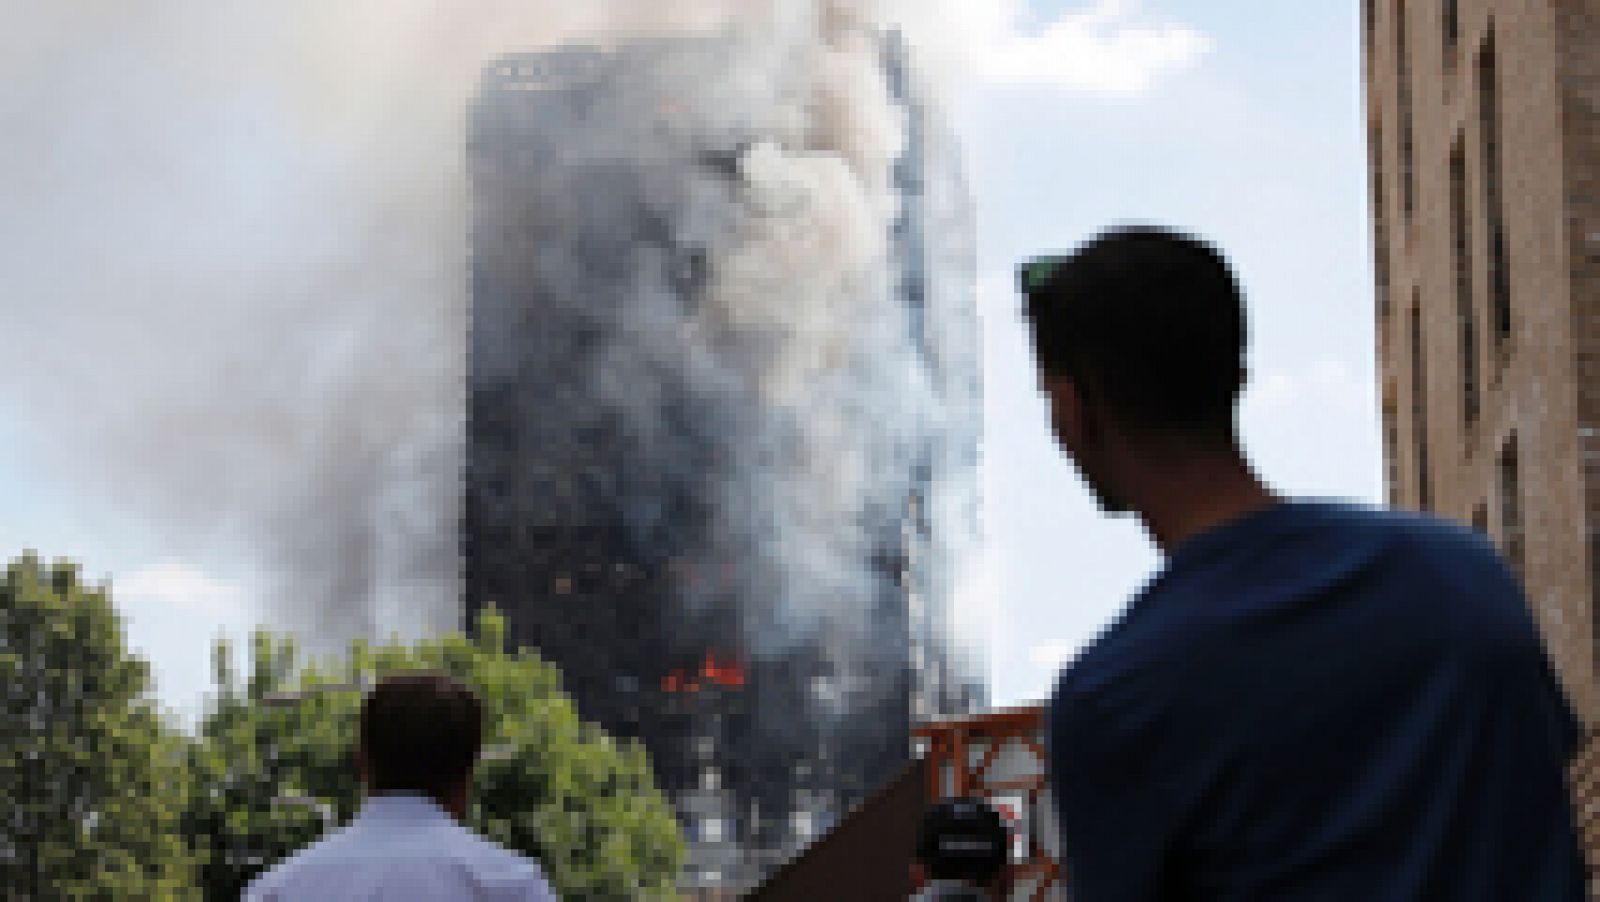 Telediario 1: Testigos del incendio que consume un edificio de viviendas en Londres describen un espectaculo "aterrador" | RTVE Play